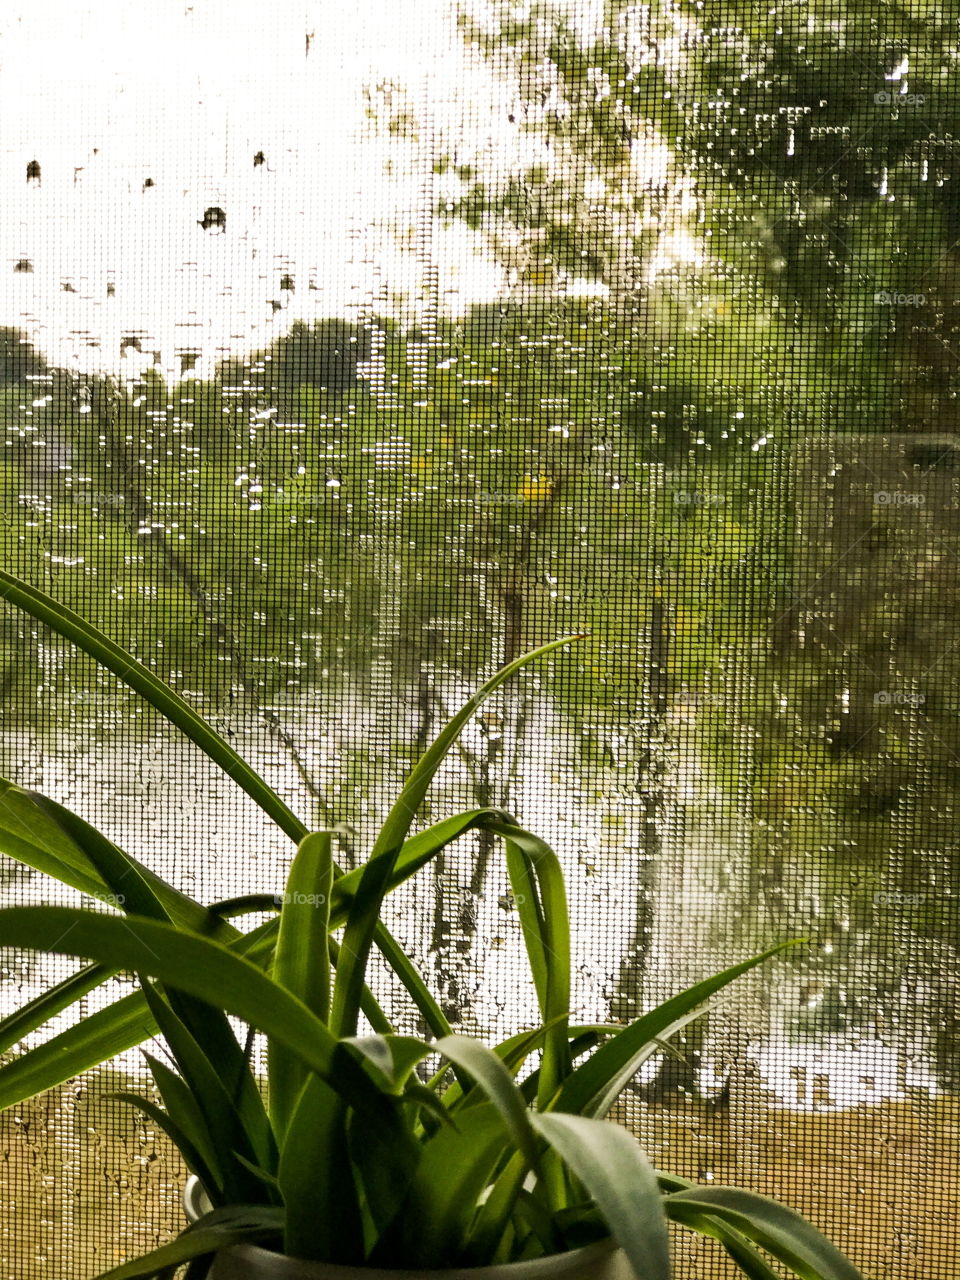 Fall rain from window